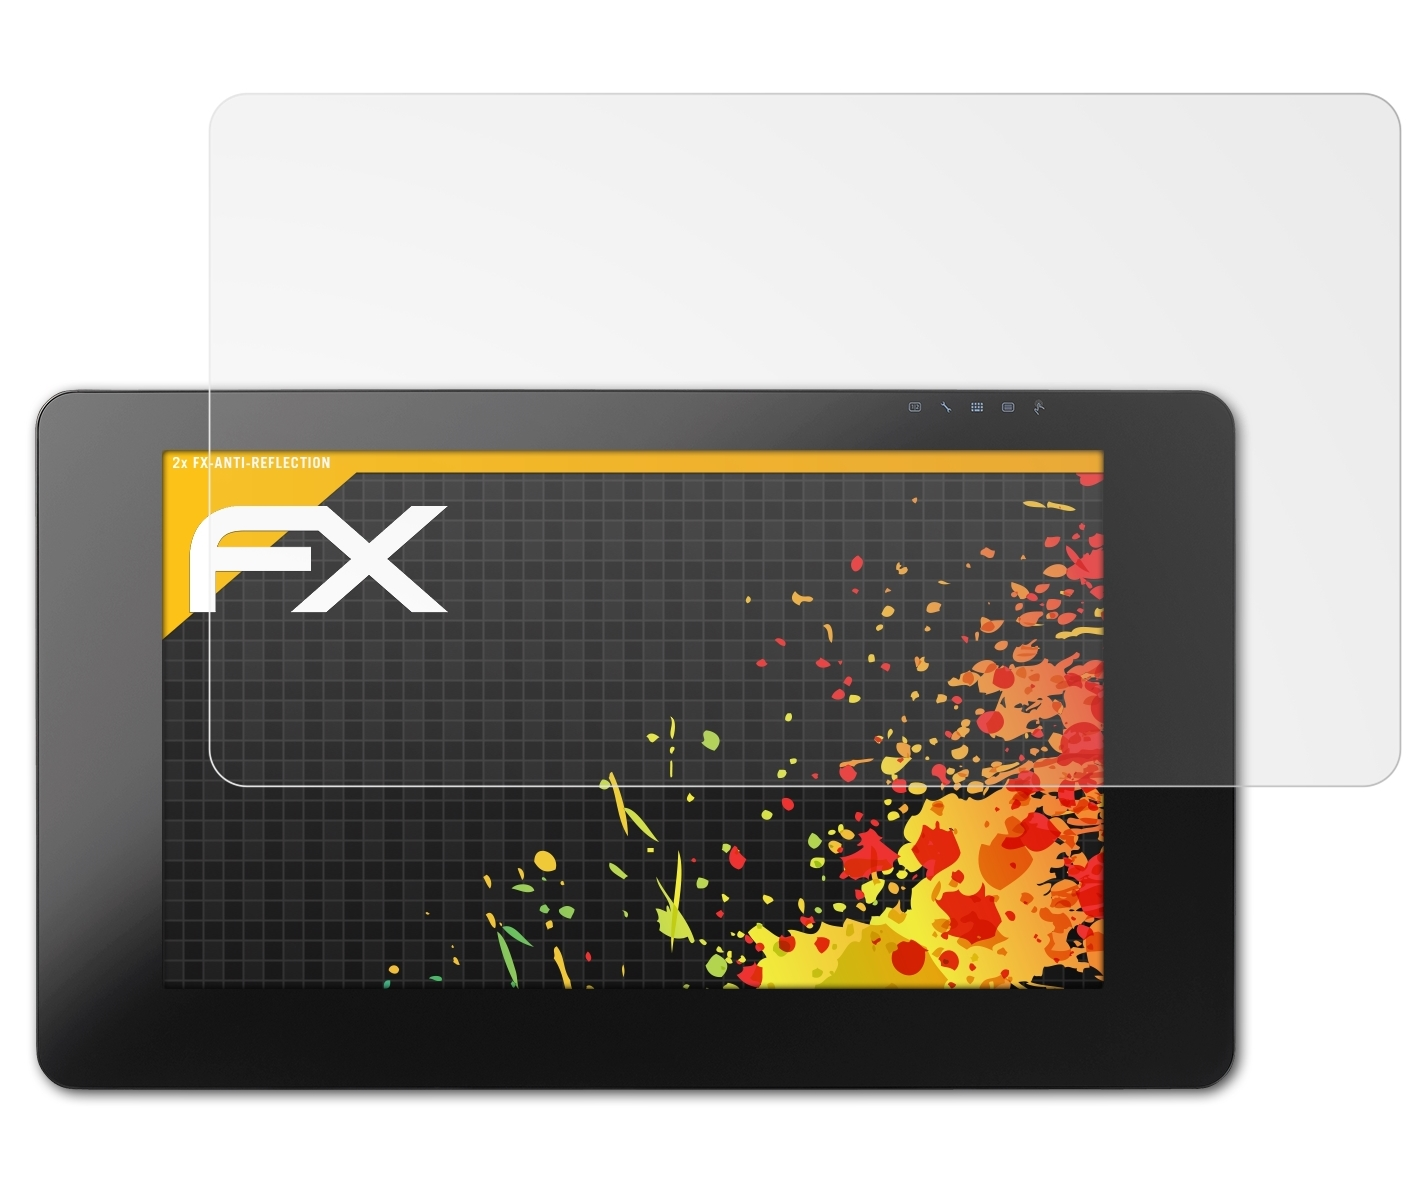 ATFOLIX 2x FX-Antireflex Pro Displayschutz(für Wacom 24) CINTIQ